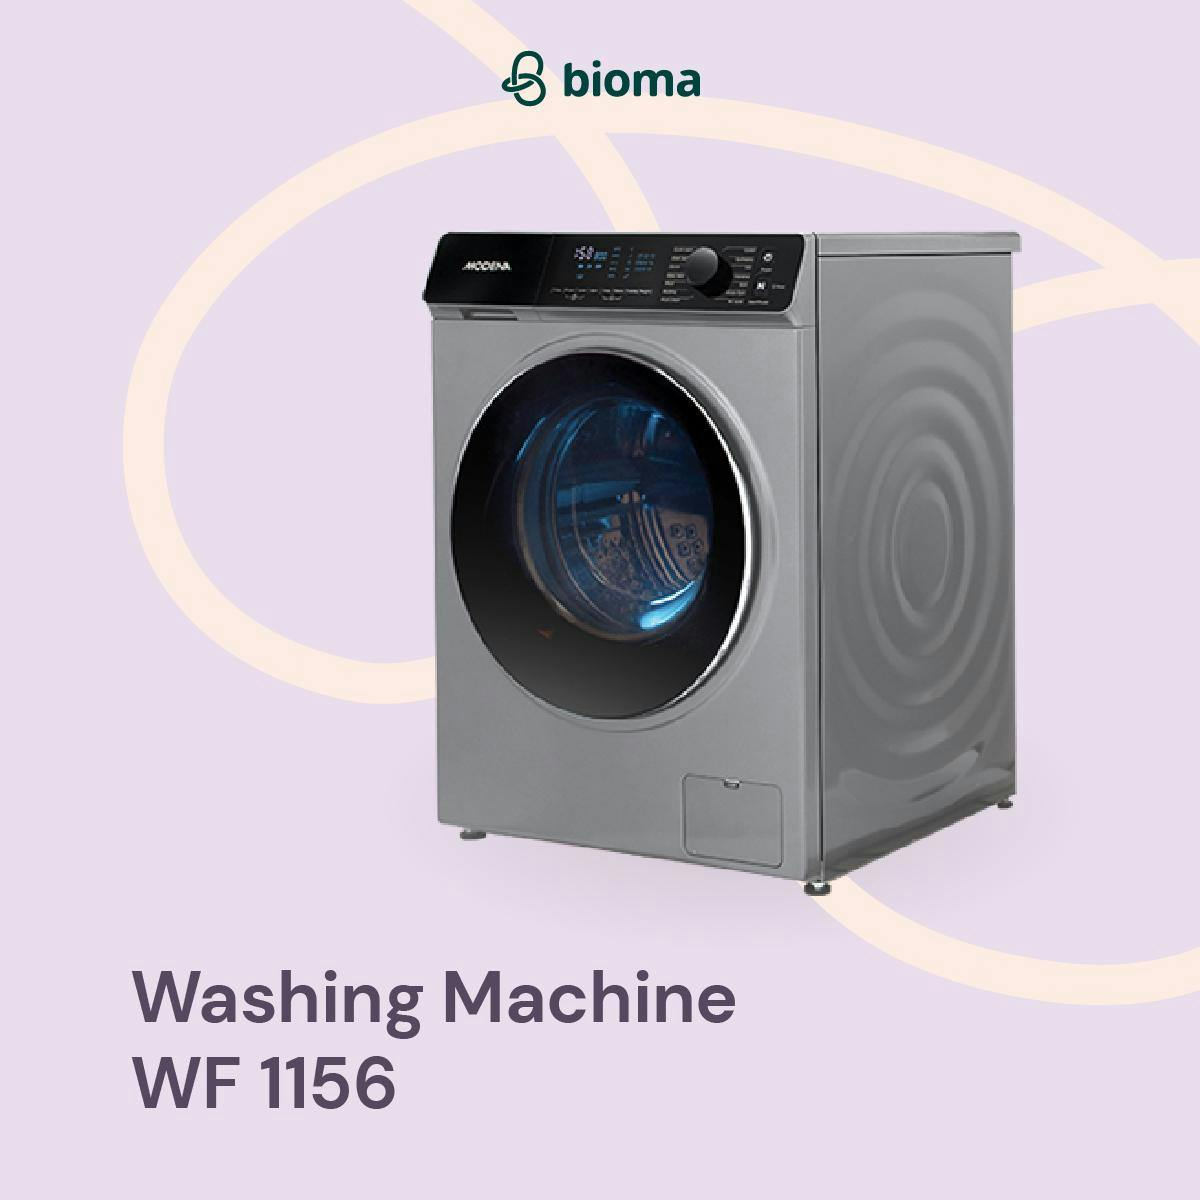 Washing Machine WF 1156